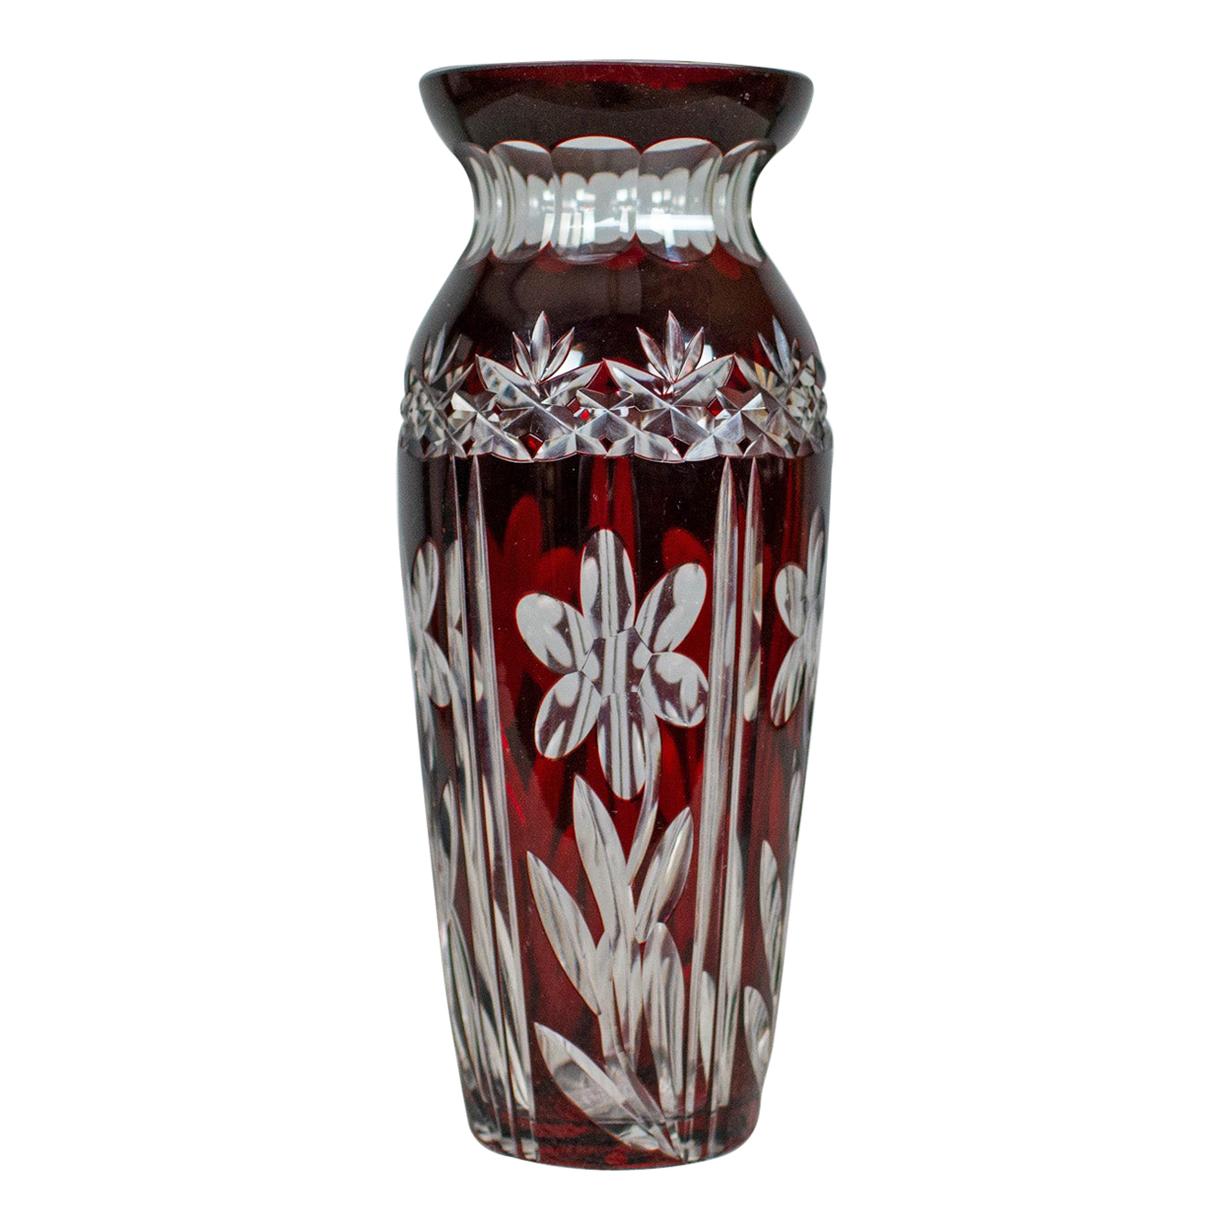 Vintage Baluster Glass Vase, Claret, Cut, Art Deco Taste, Mid-20th Century